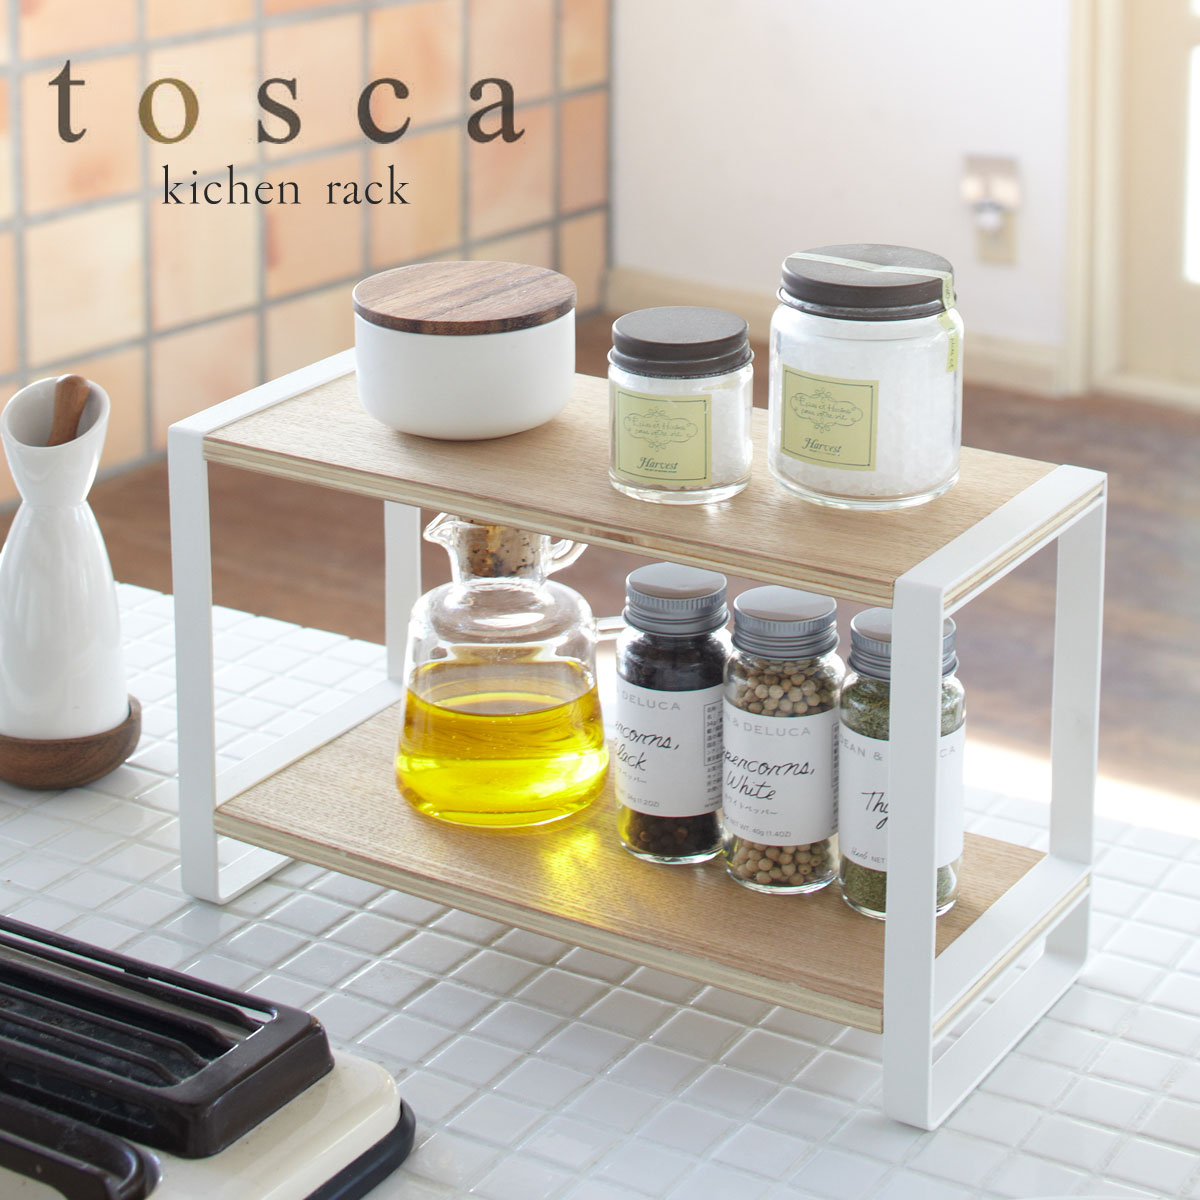 lighterya Kitchen storage kitchen rack Tosca tosca white 